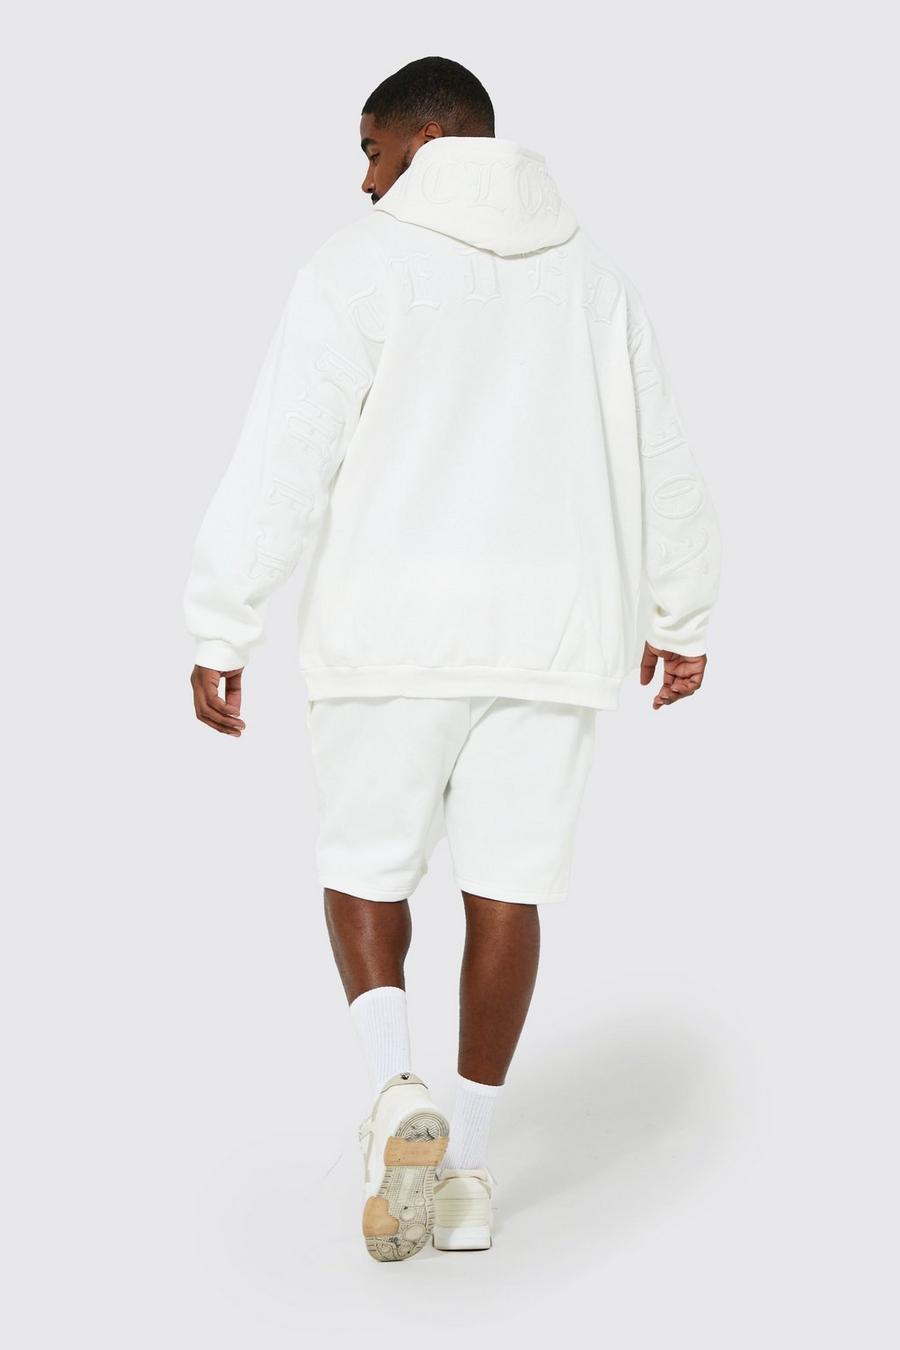 Ecru bianco חליפת טרנינג עם שורט ורקמה בתלת ממד, מידות גדולות